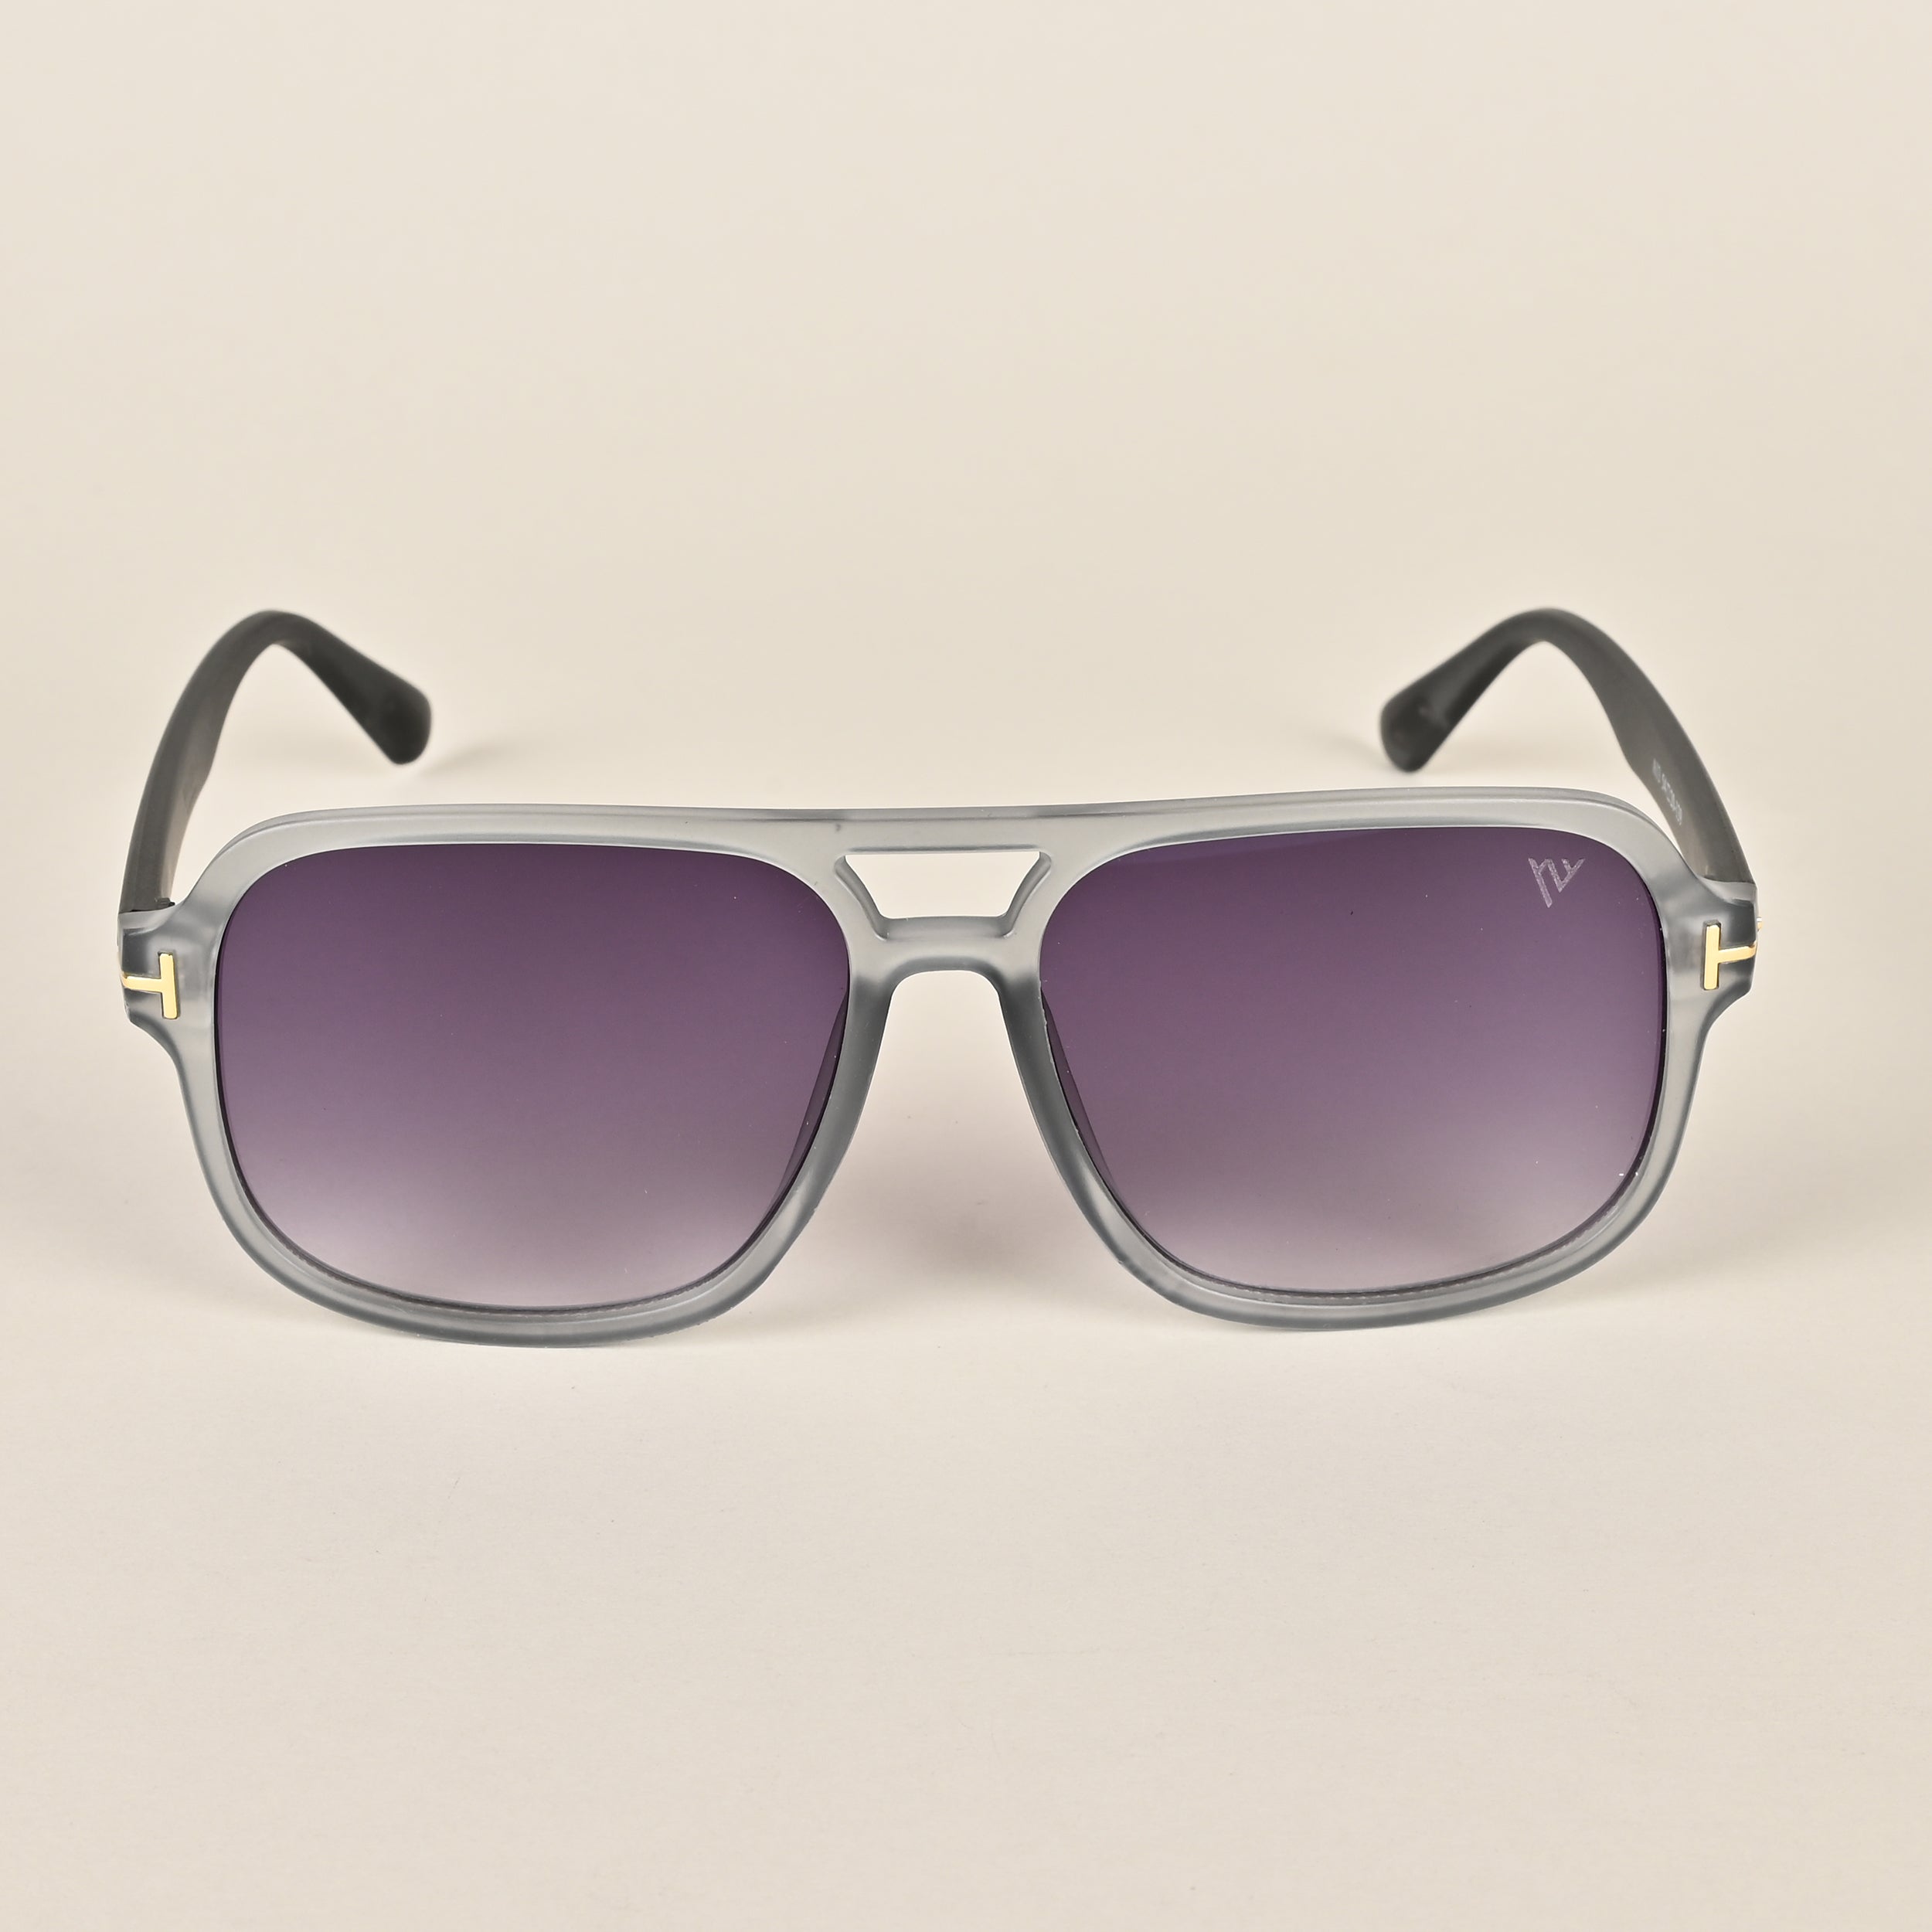 Voyage Grey Wayfarer Sunglasses (A13MG3940)